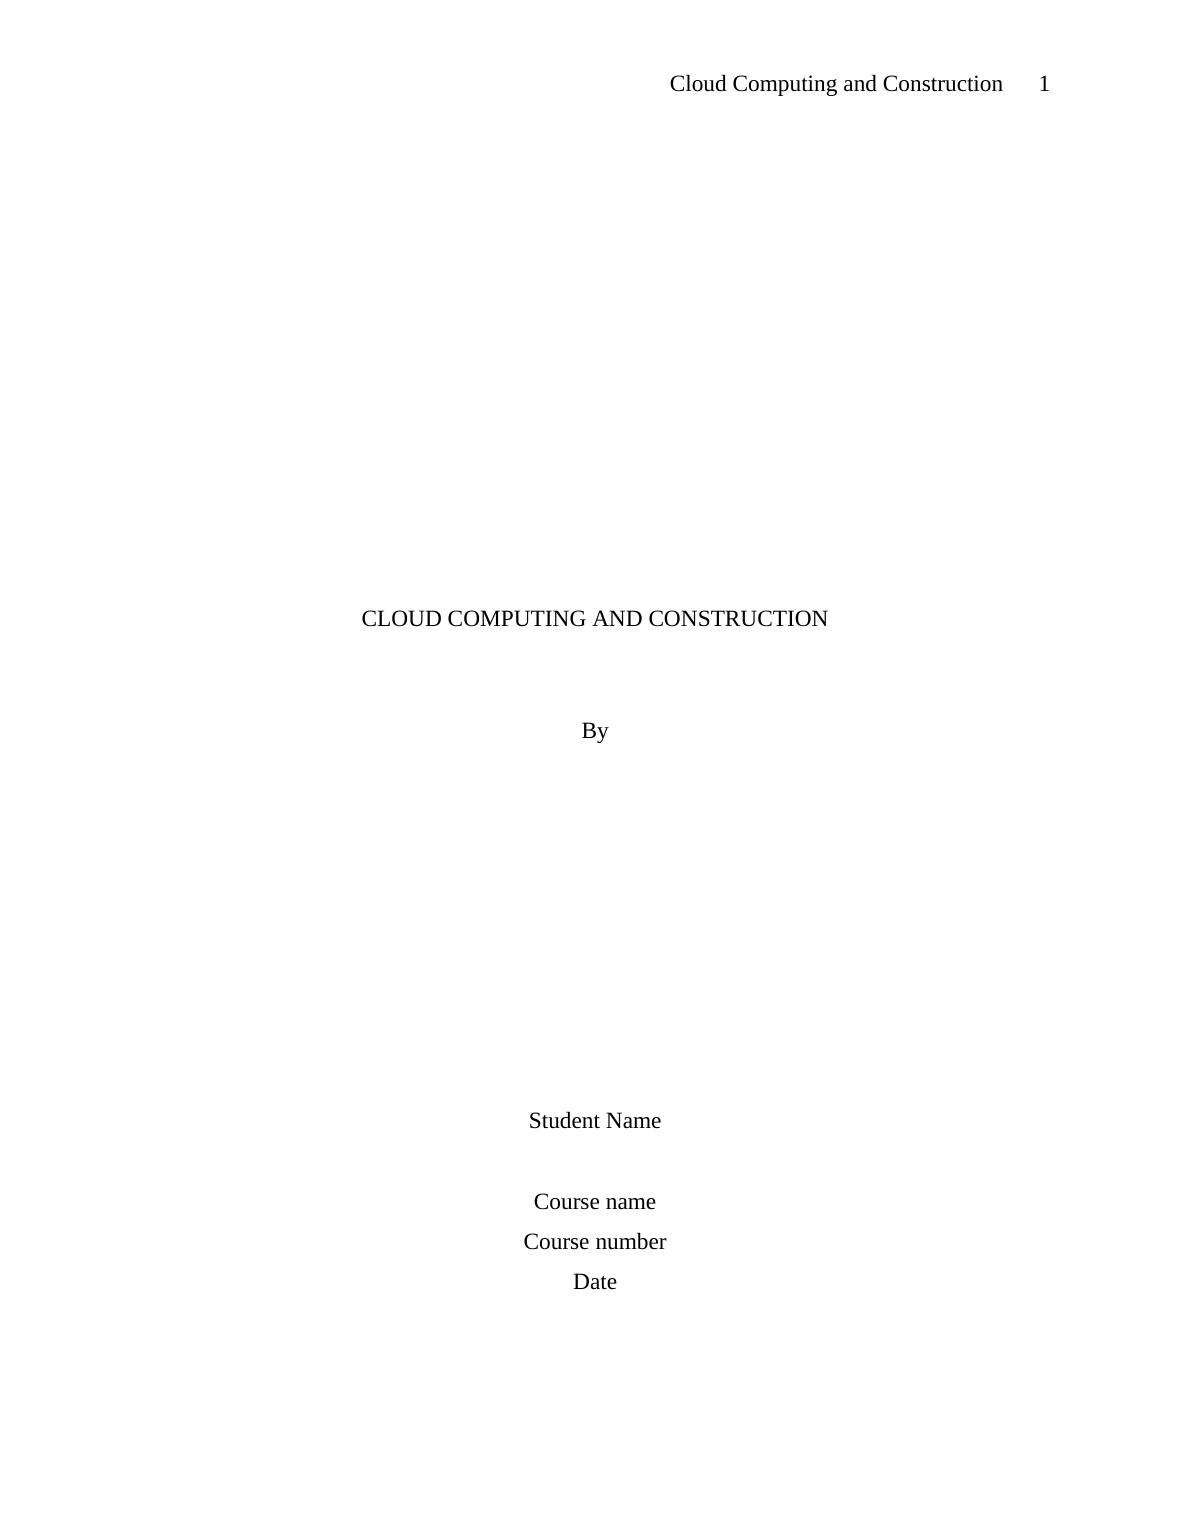 Cloud computing and Construction PDF_1